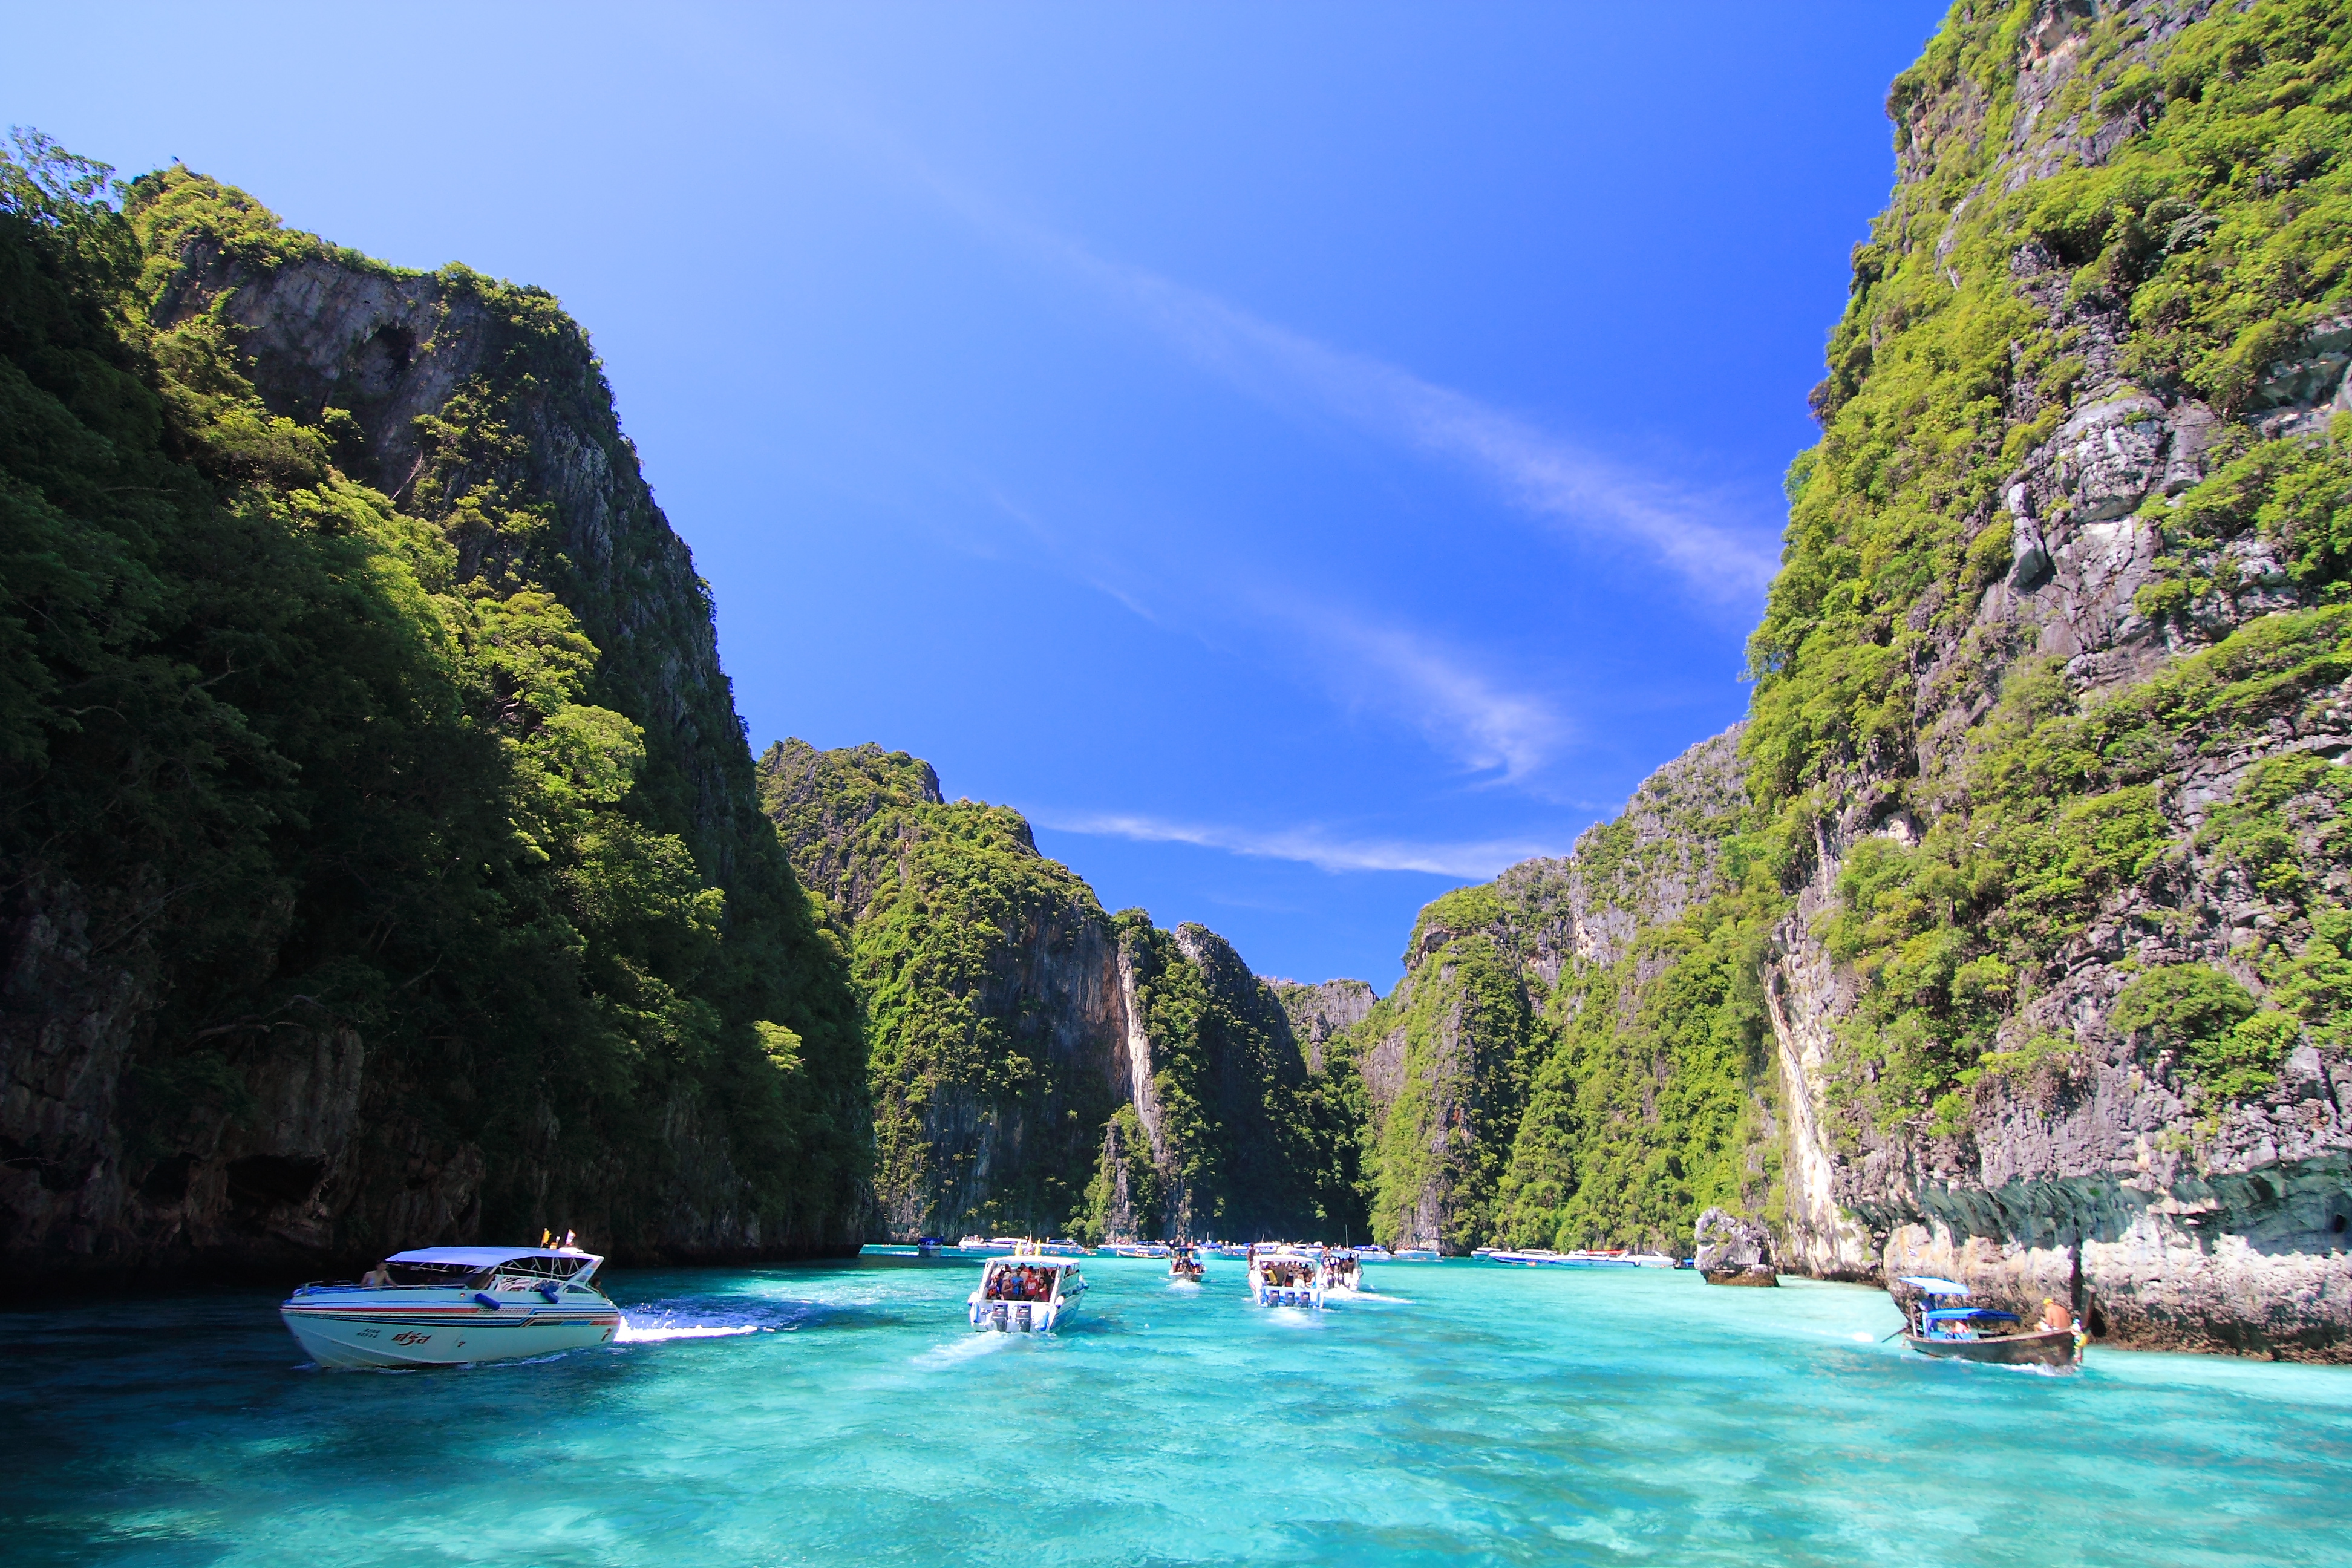 Phi Phi Islands Cruise (1 day)